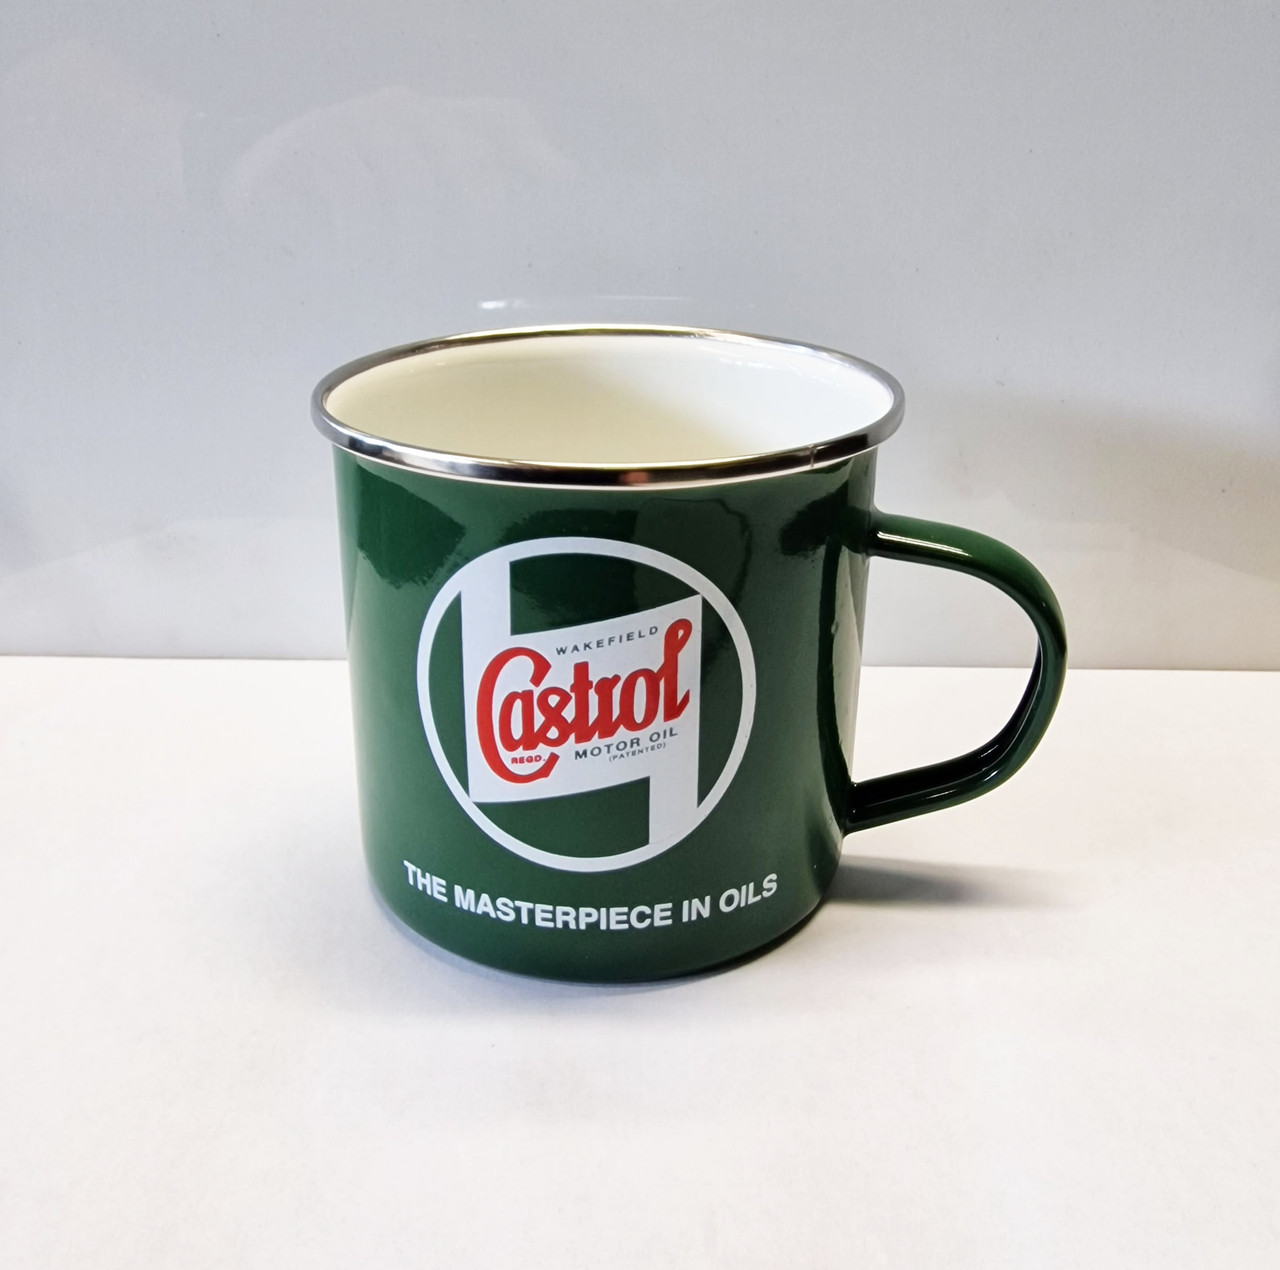 Castrol tin mug - STR588